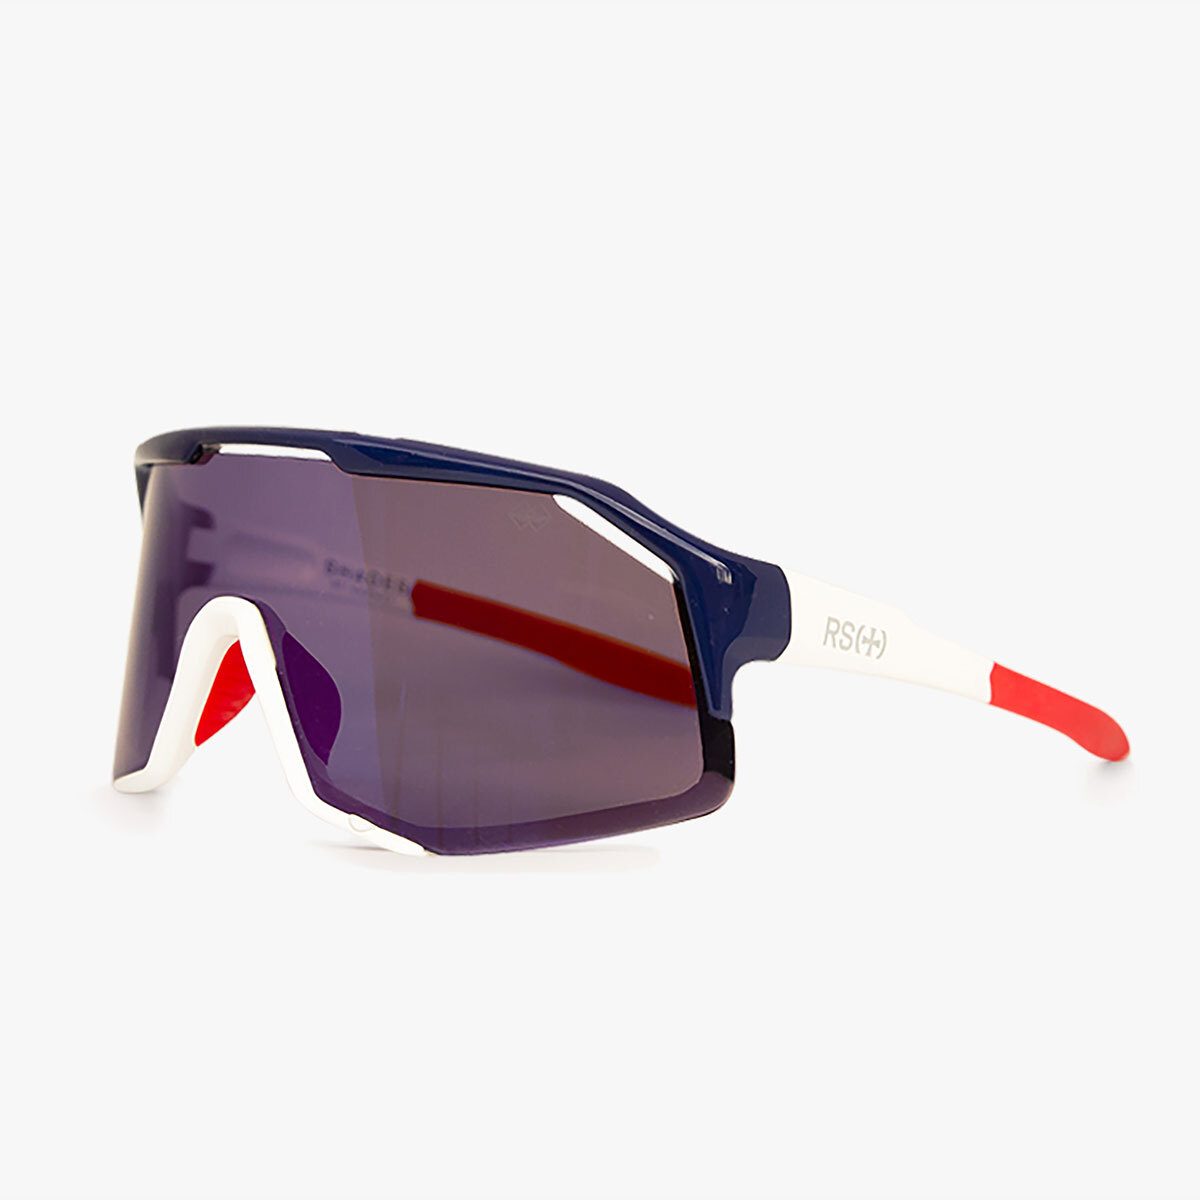 Eye glass accessory, Vision care, Goggles, Eyewear, Sunglasses